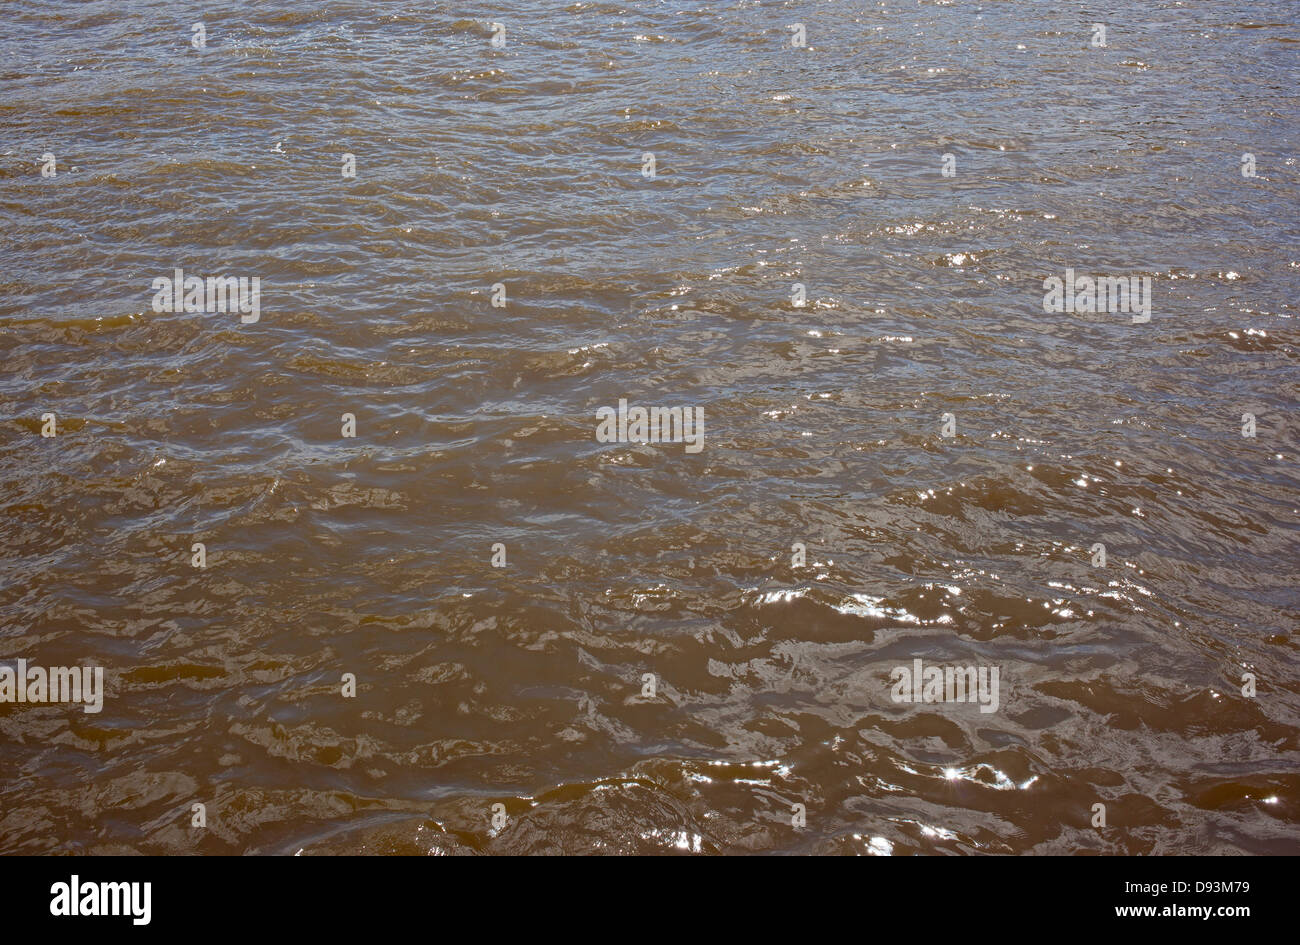 Thames river water close up, London UK. Stock Photo